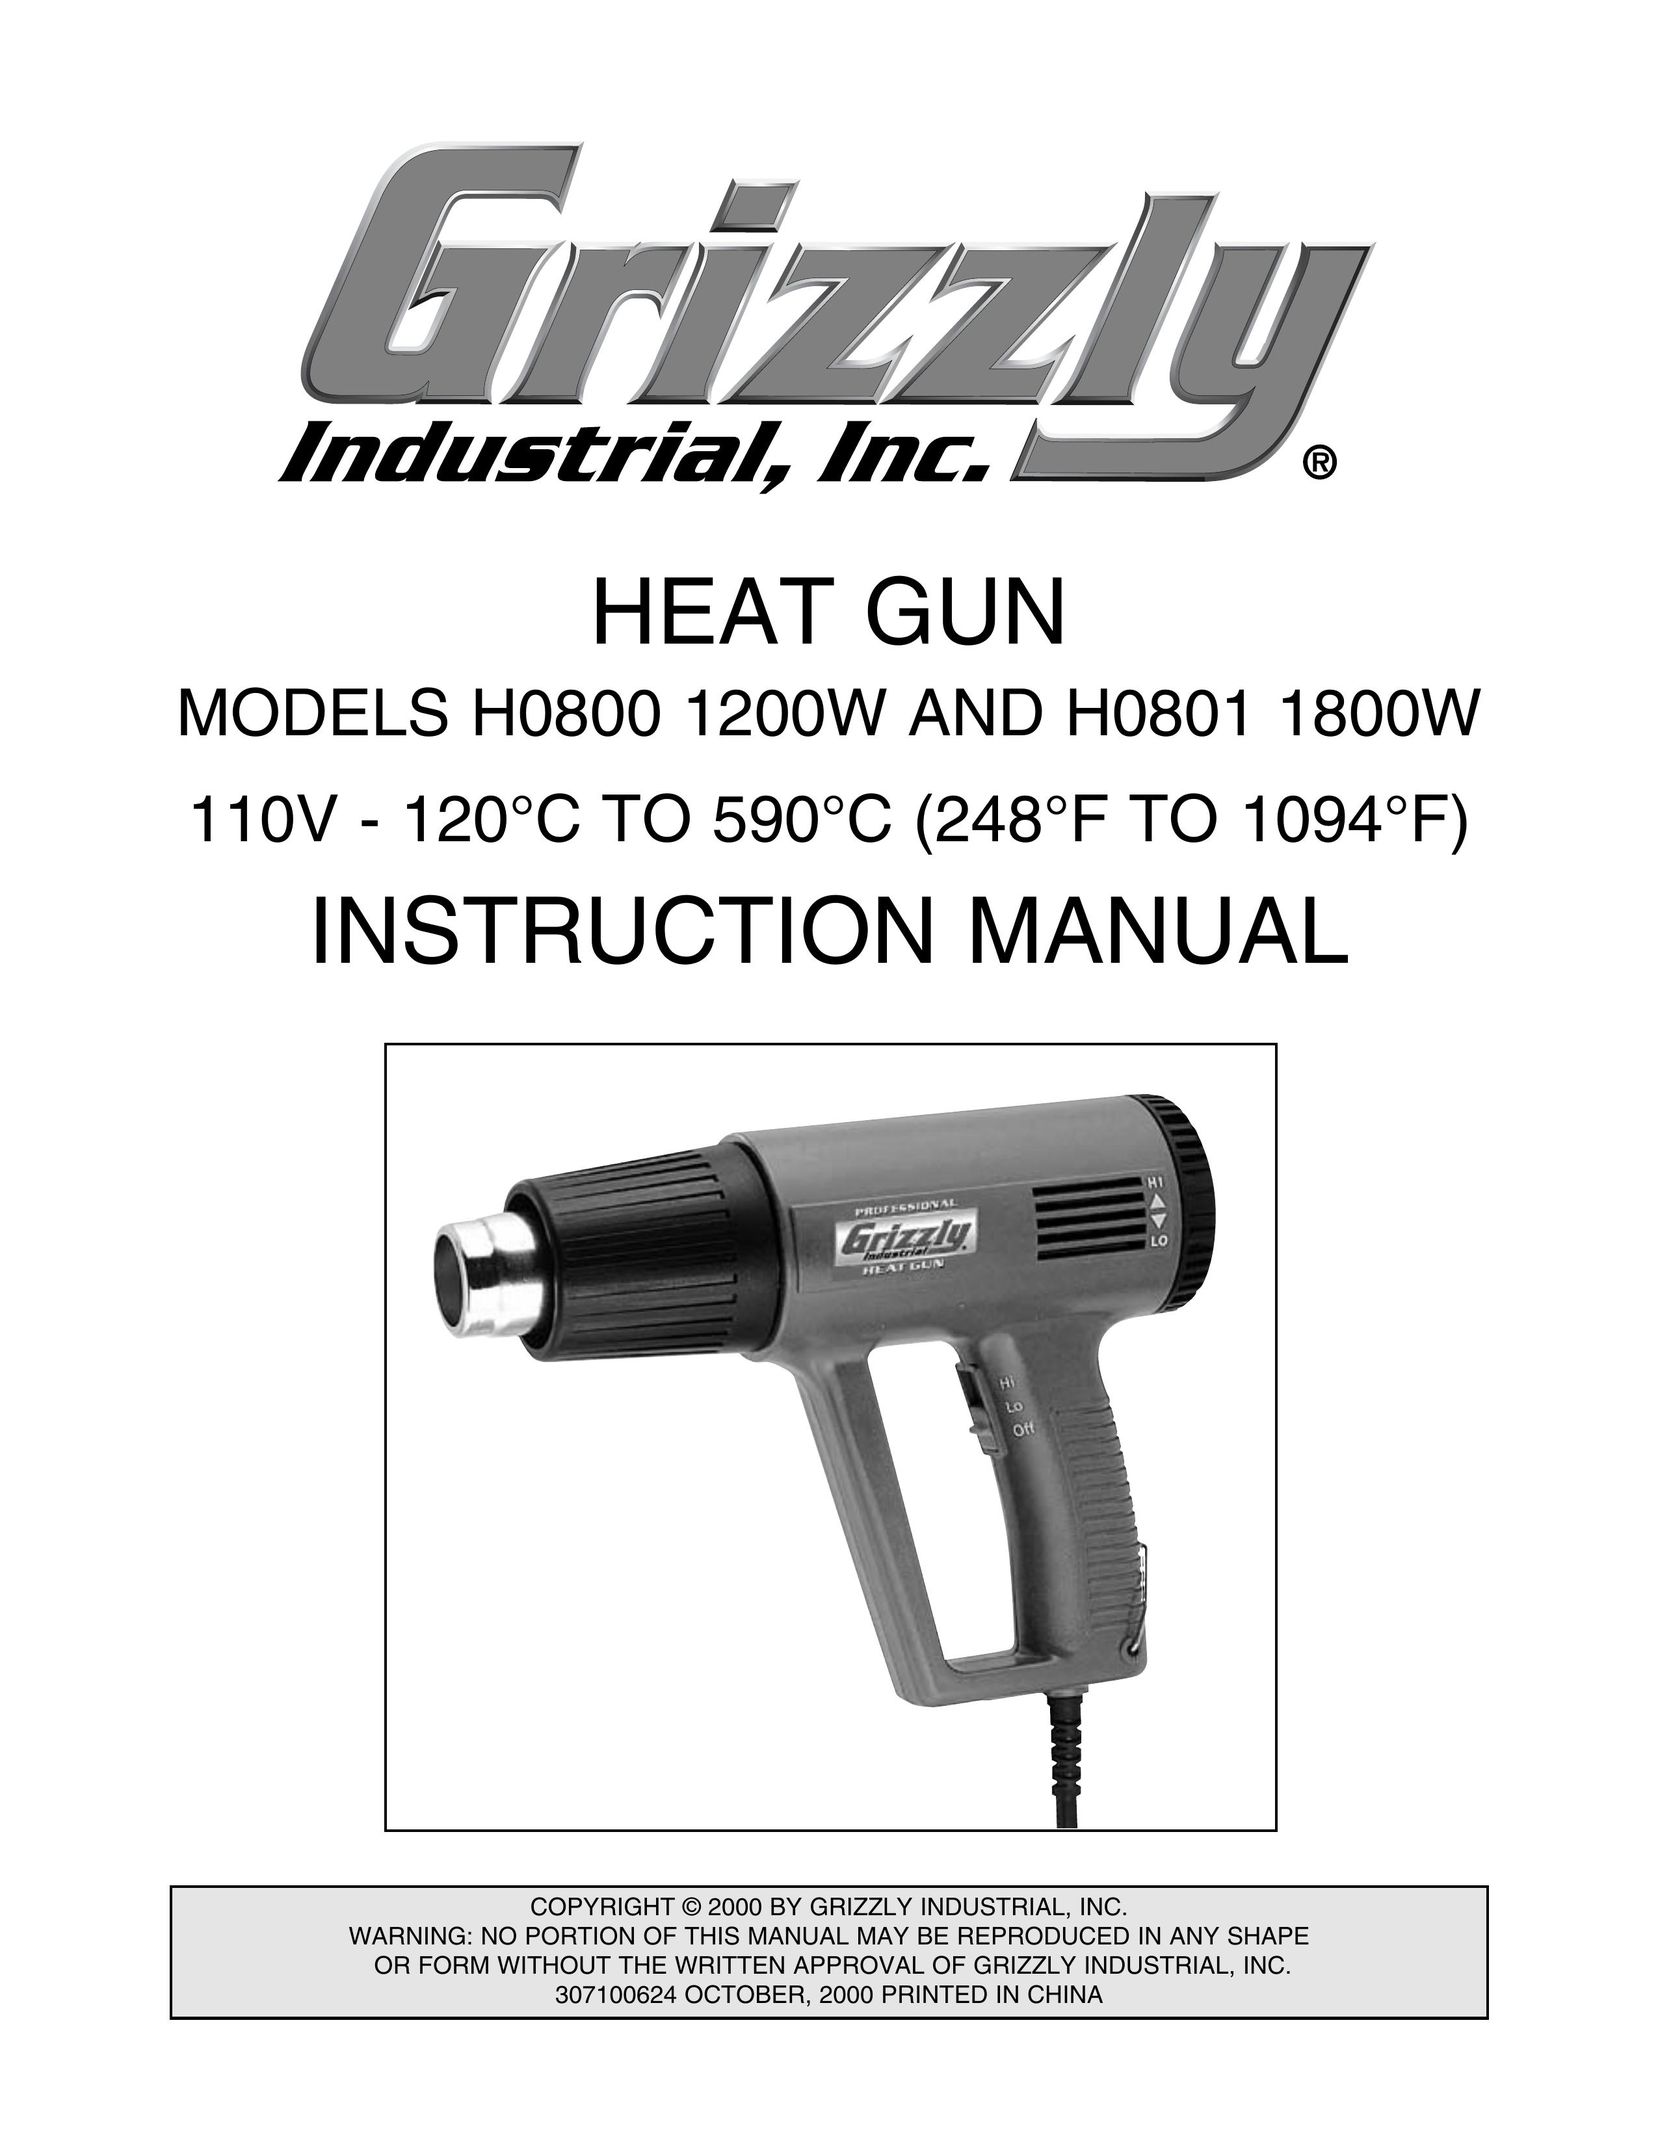 Grizzly H0801 1800W Heat Gun User Manual